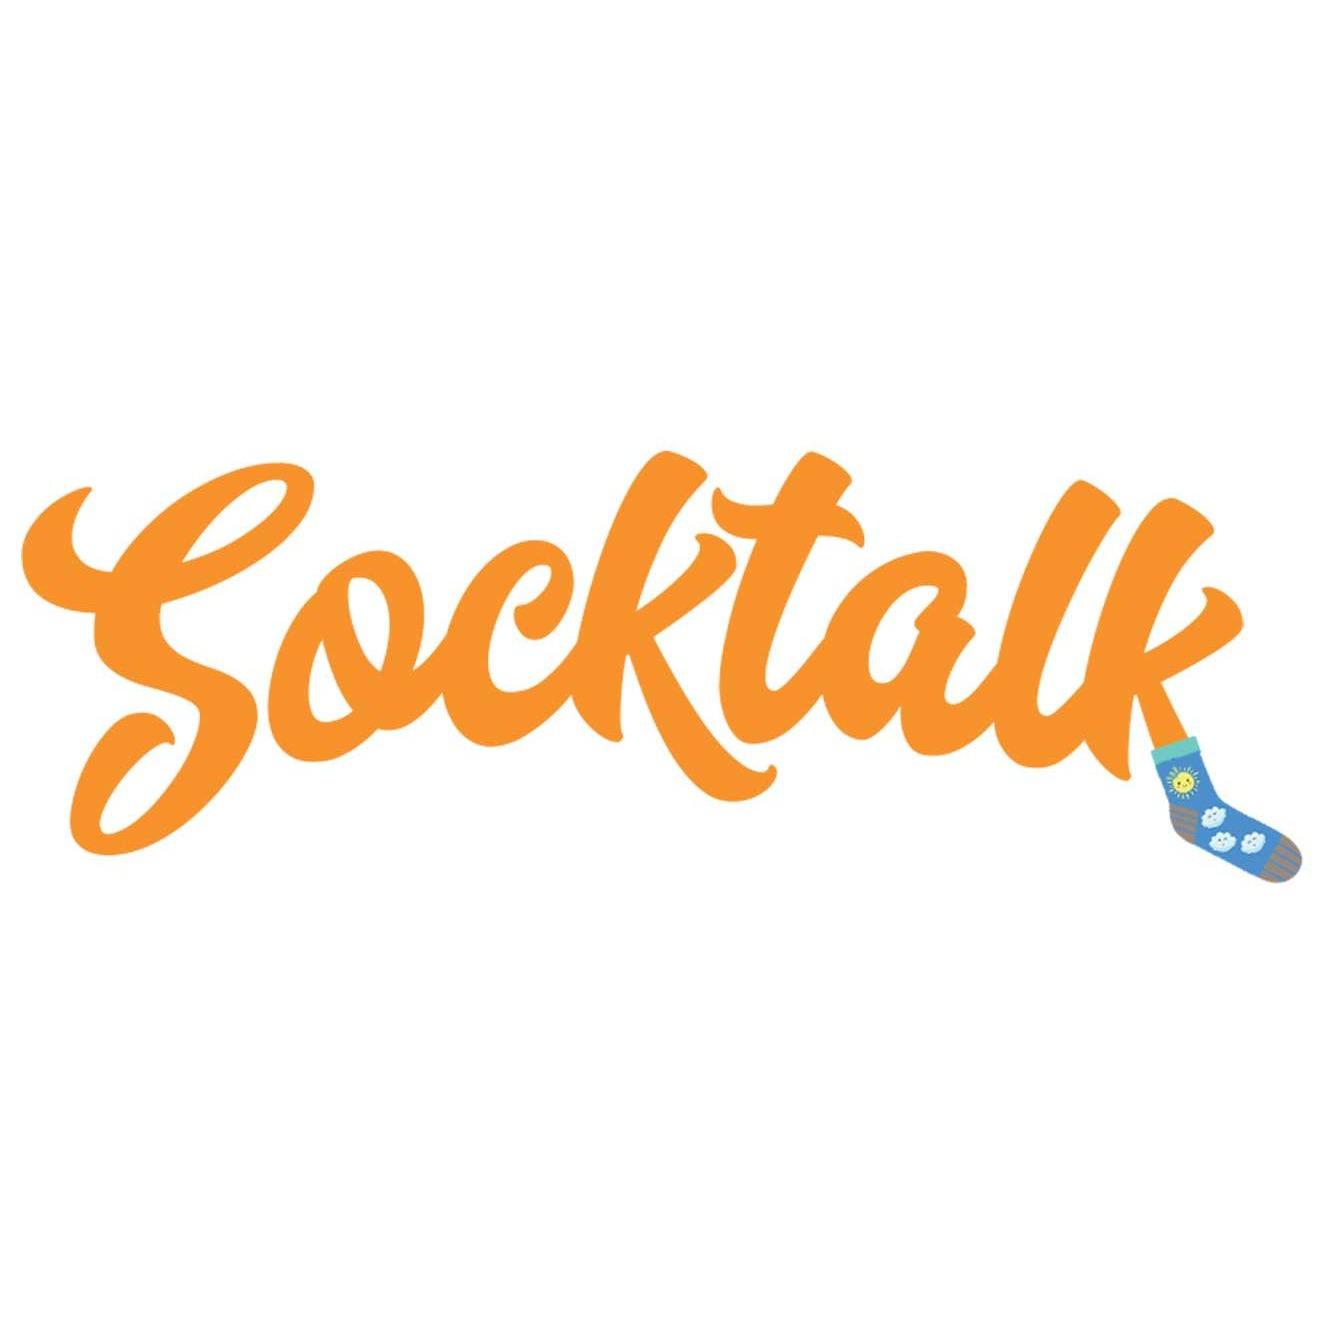 SockTalk